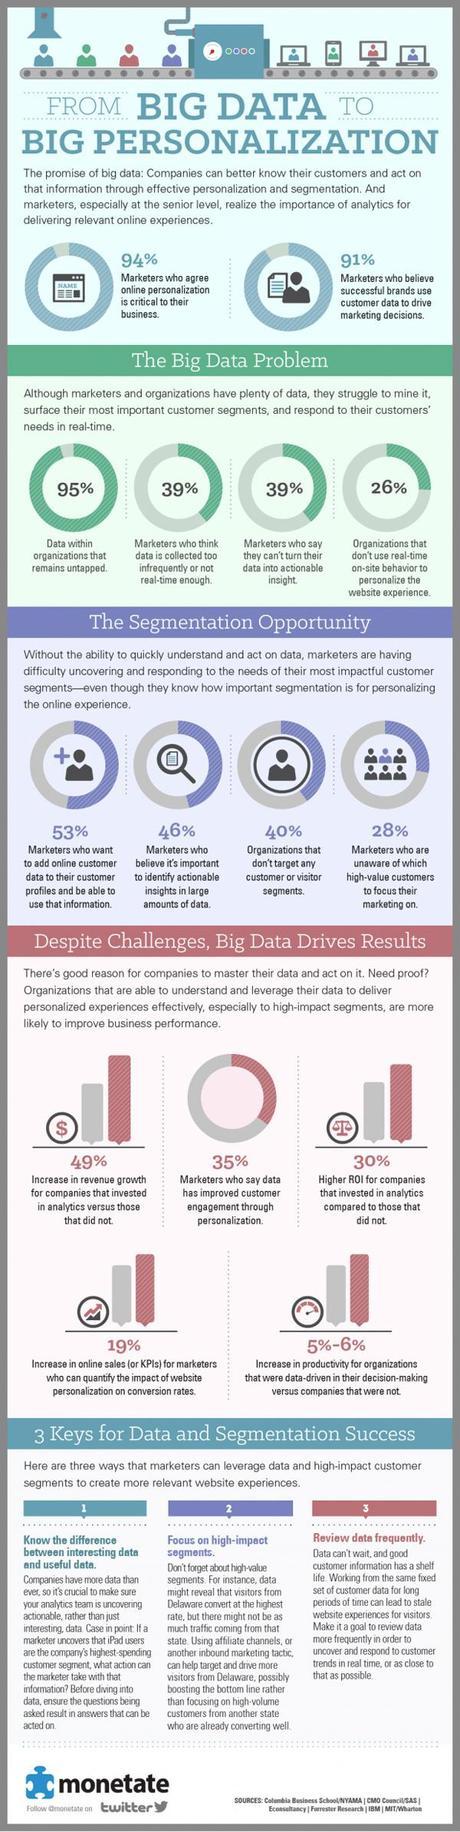 Big-data-personalization-infographic